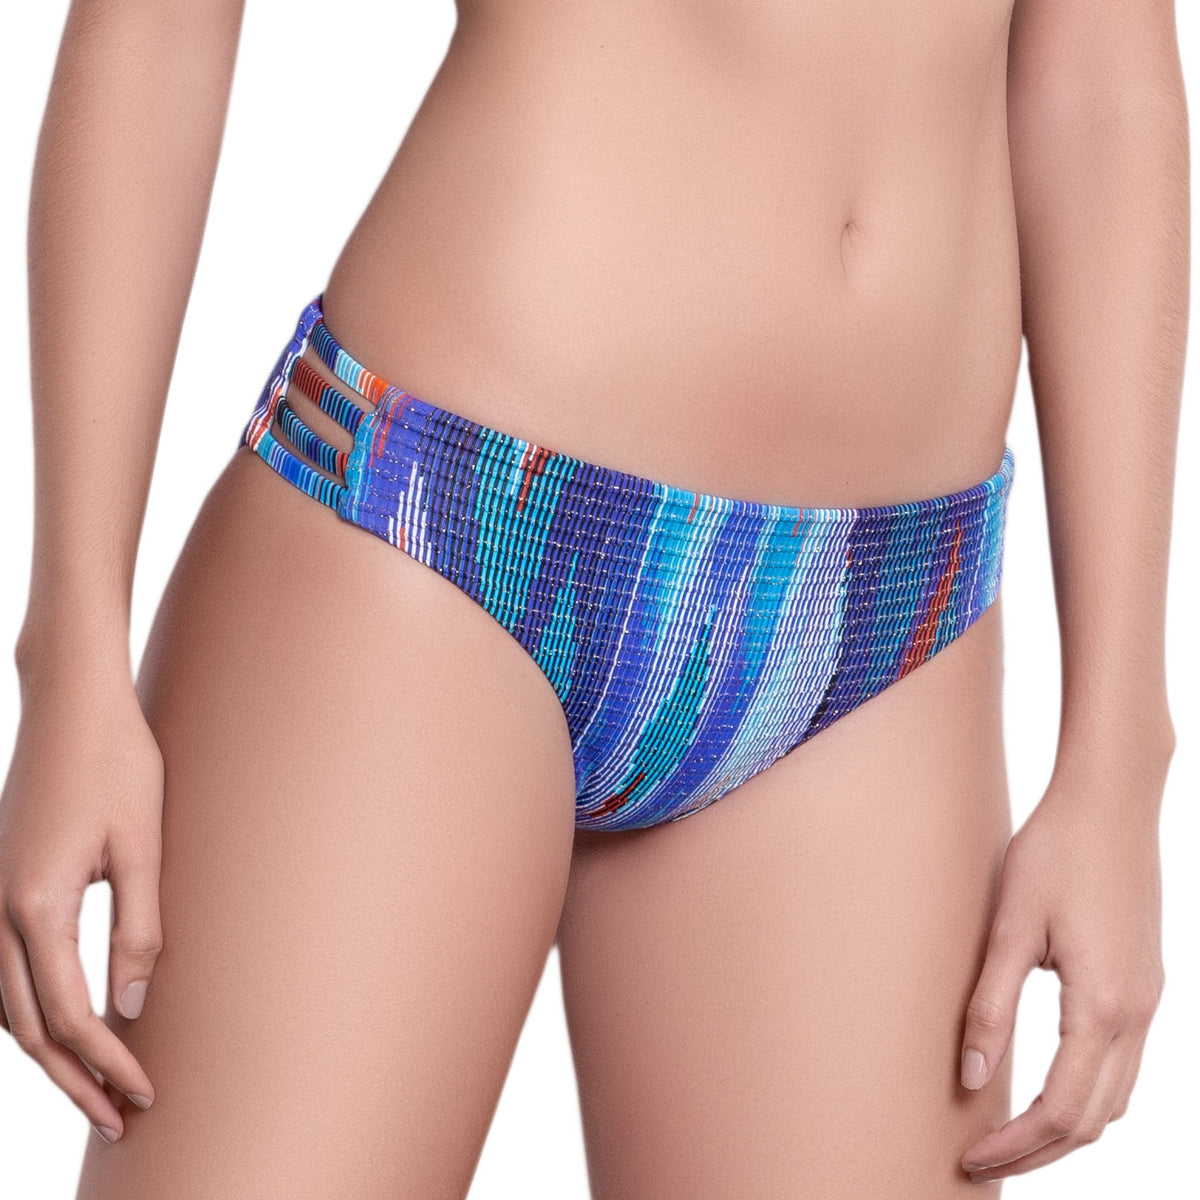 EVA strappy panty, textured printed bikini bottom by ALMA swimwear ‚Äì front view 2